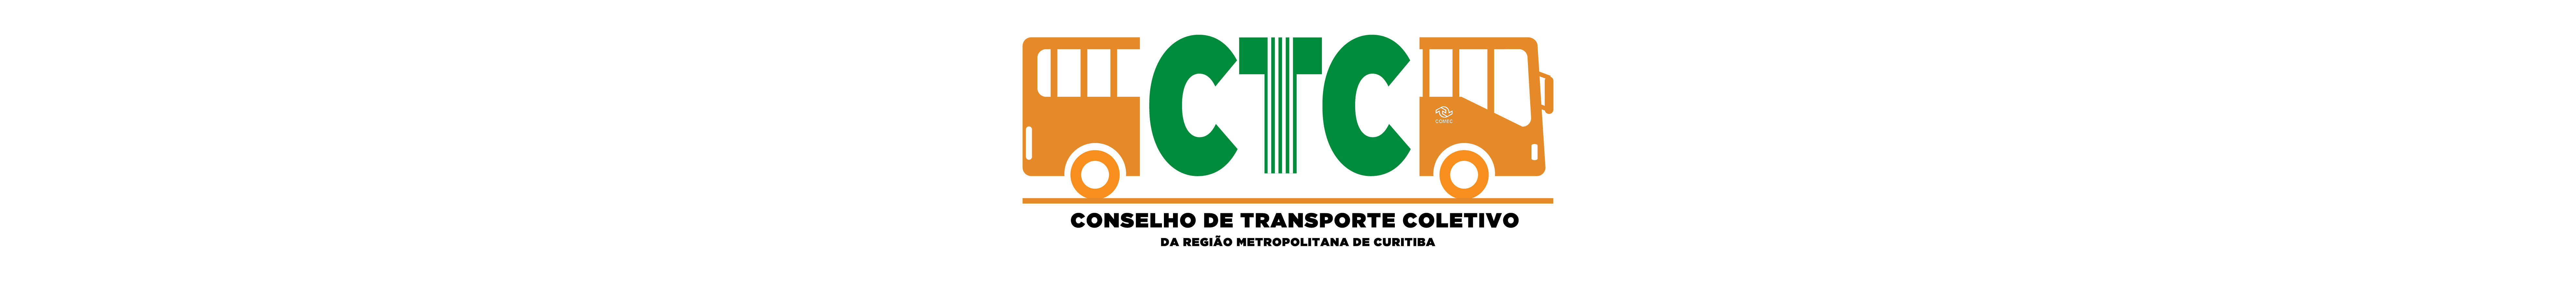 banner ctc